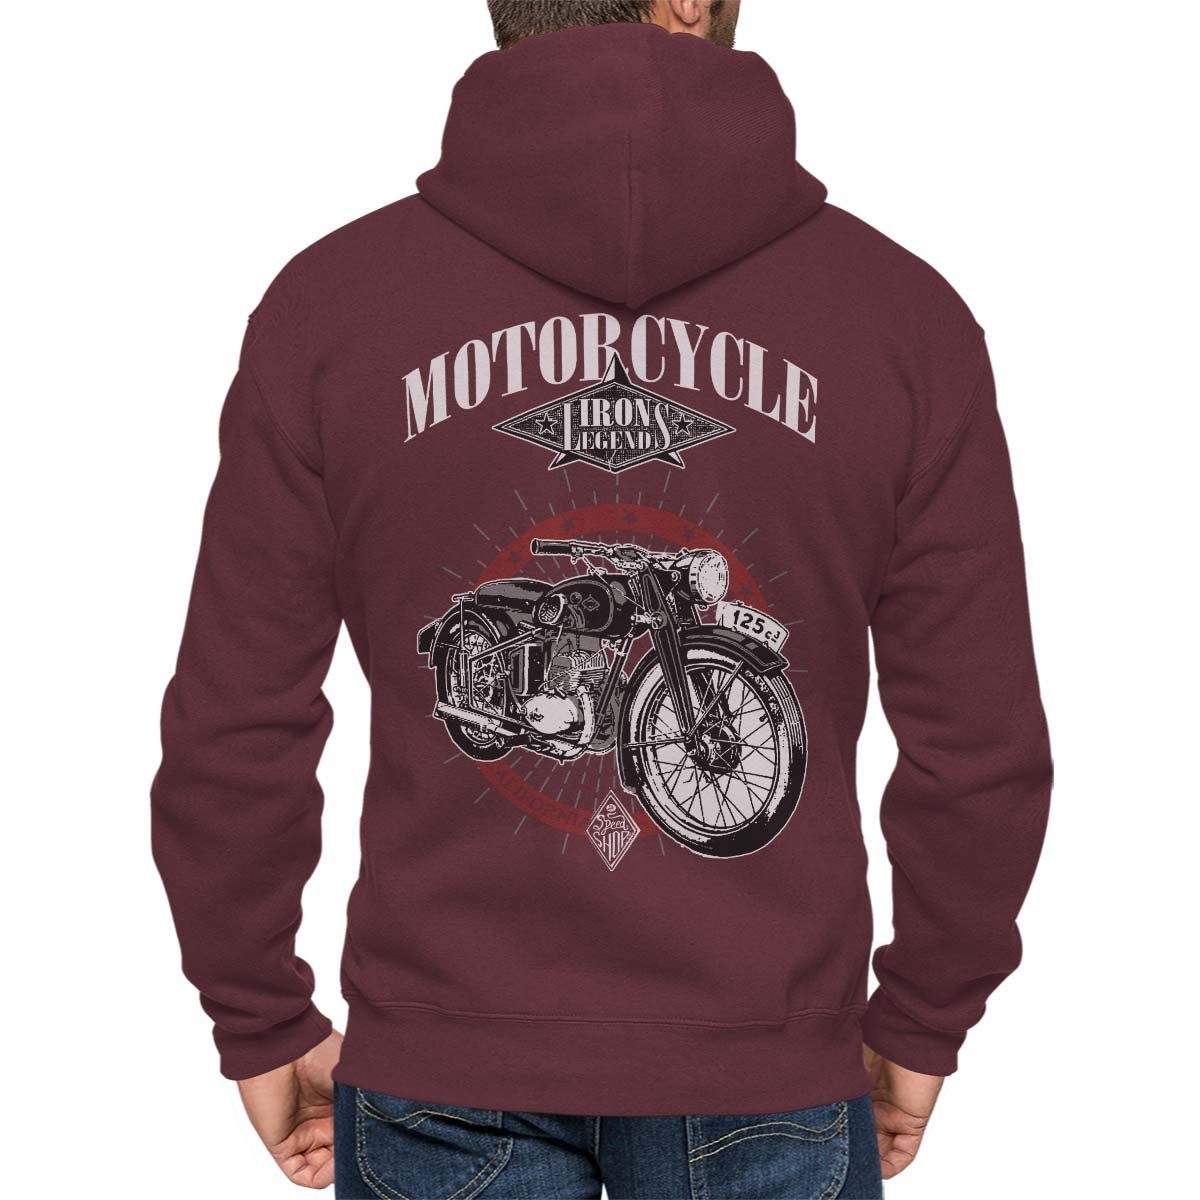 Rebel On Wheels Kapuzensweatjacke Kapuzenjacke Zip Hoodie Iron Legend mit Motorrad / Biker Motiv Dunkel Rot